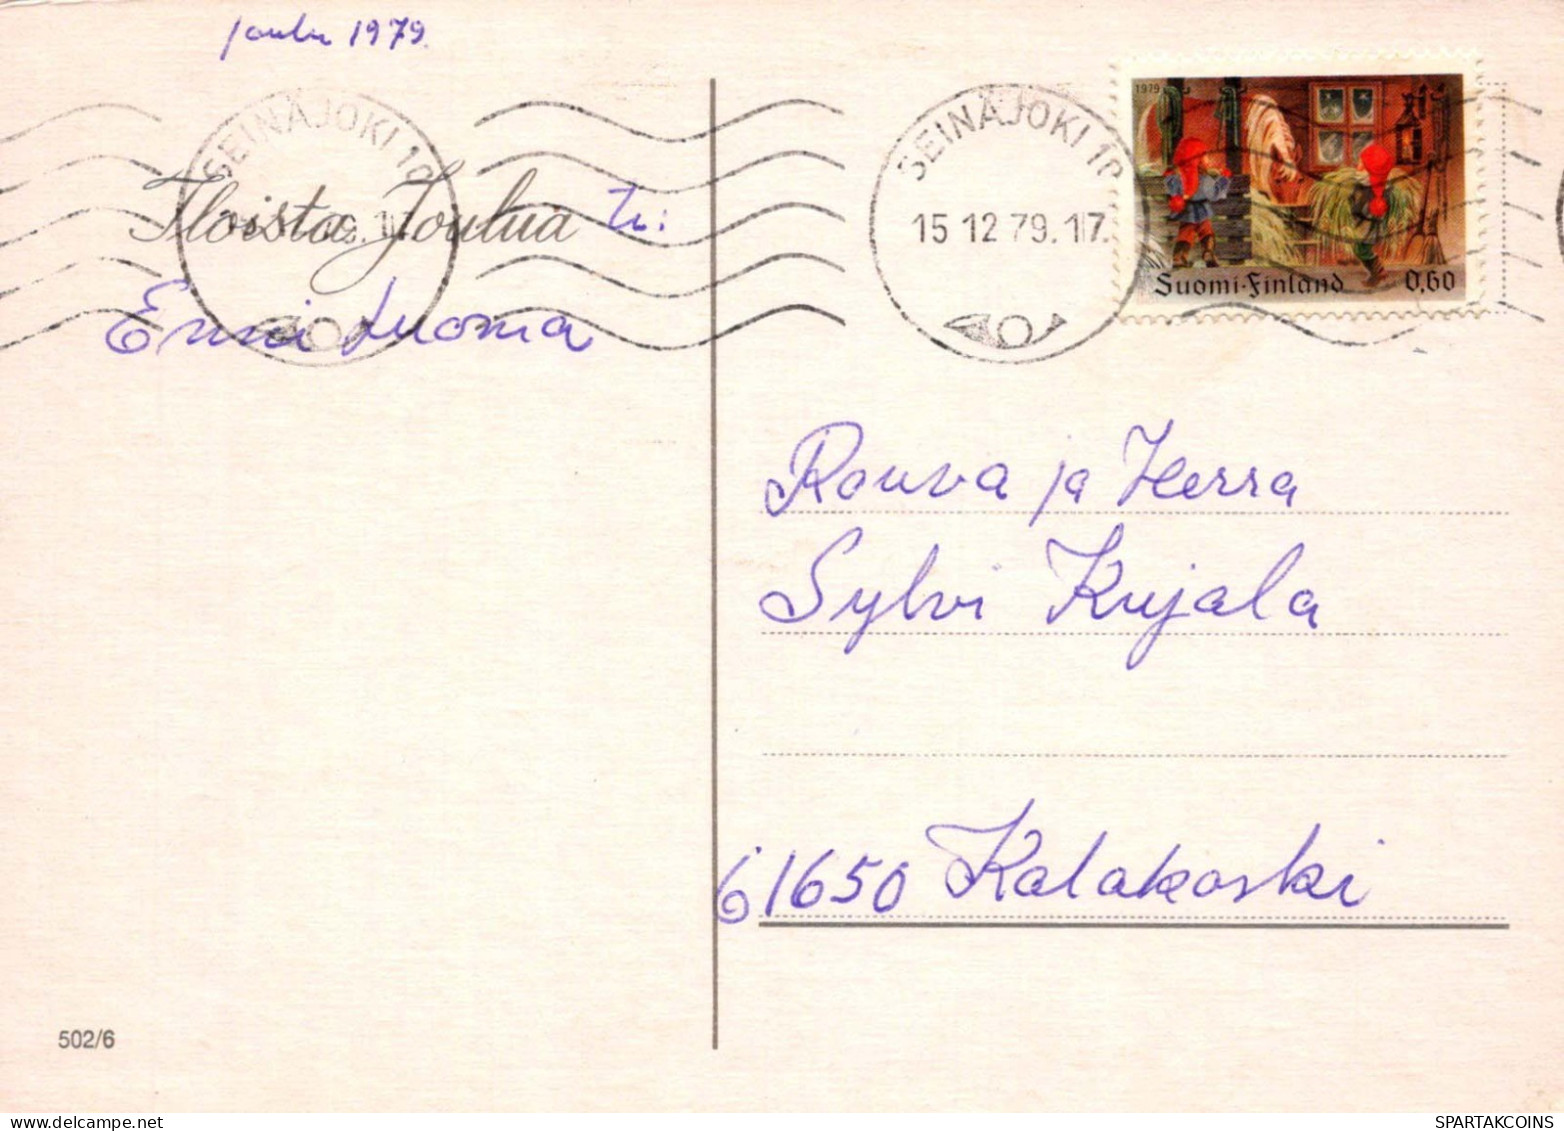 PAPÁ NOEL Feliz Año Navidad GNOMO Vintage Tarjeta Postal CPSM #PBL724.A - Santa Claus